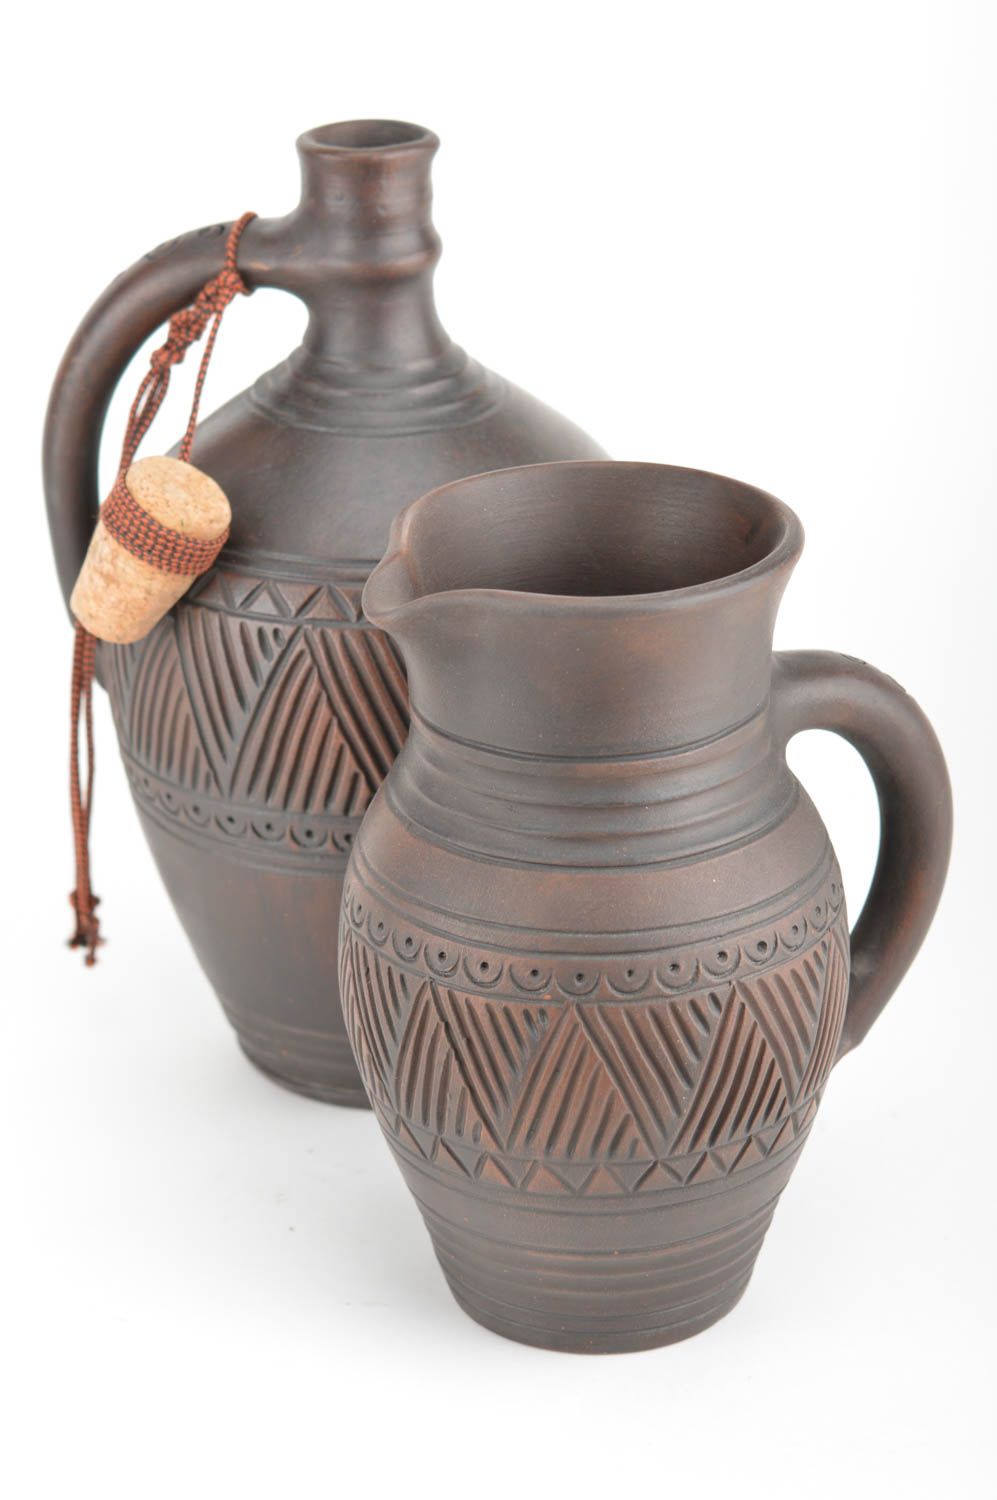 30 oz and 60 oz ceramic wine carafe and jug in dark brown color 5,31 lb  photo 2